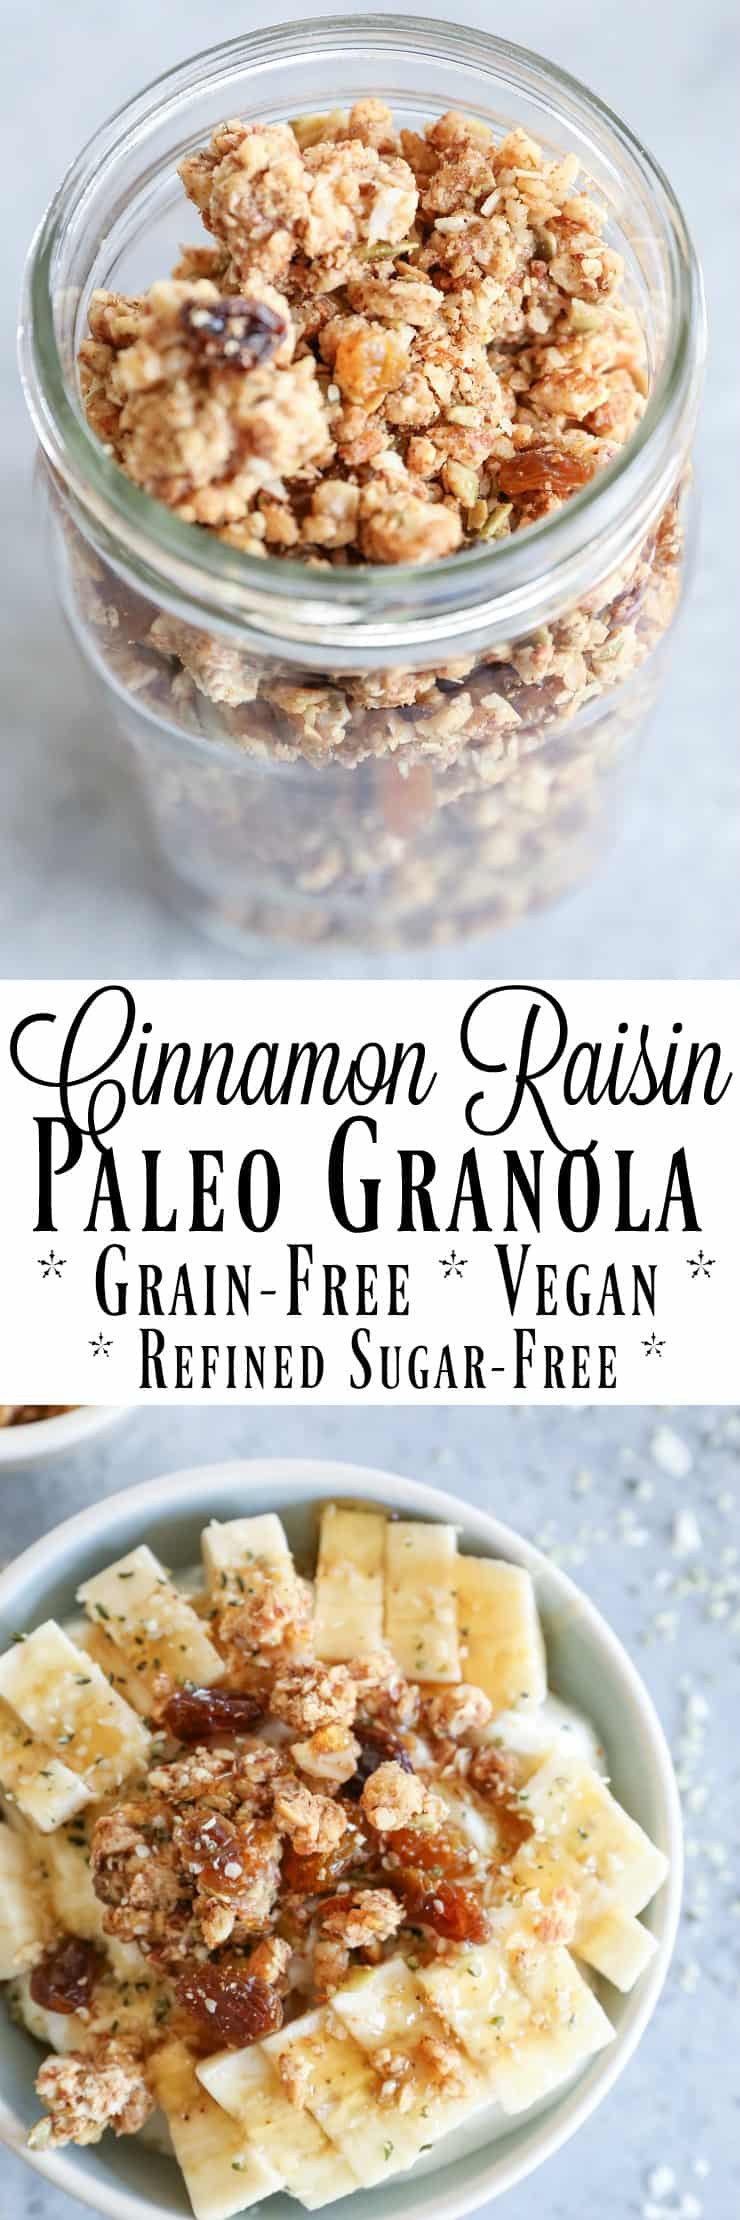 Cinnamon Raisin Paleo Granola - grain-free, refined sugar-free, vegan, and healthy! A nutritious breakfast or snack